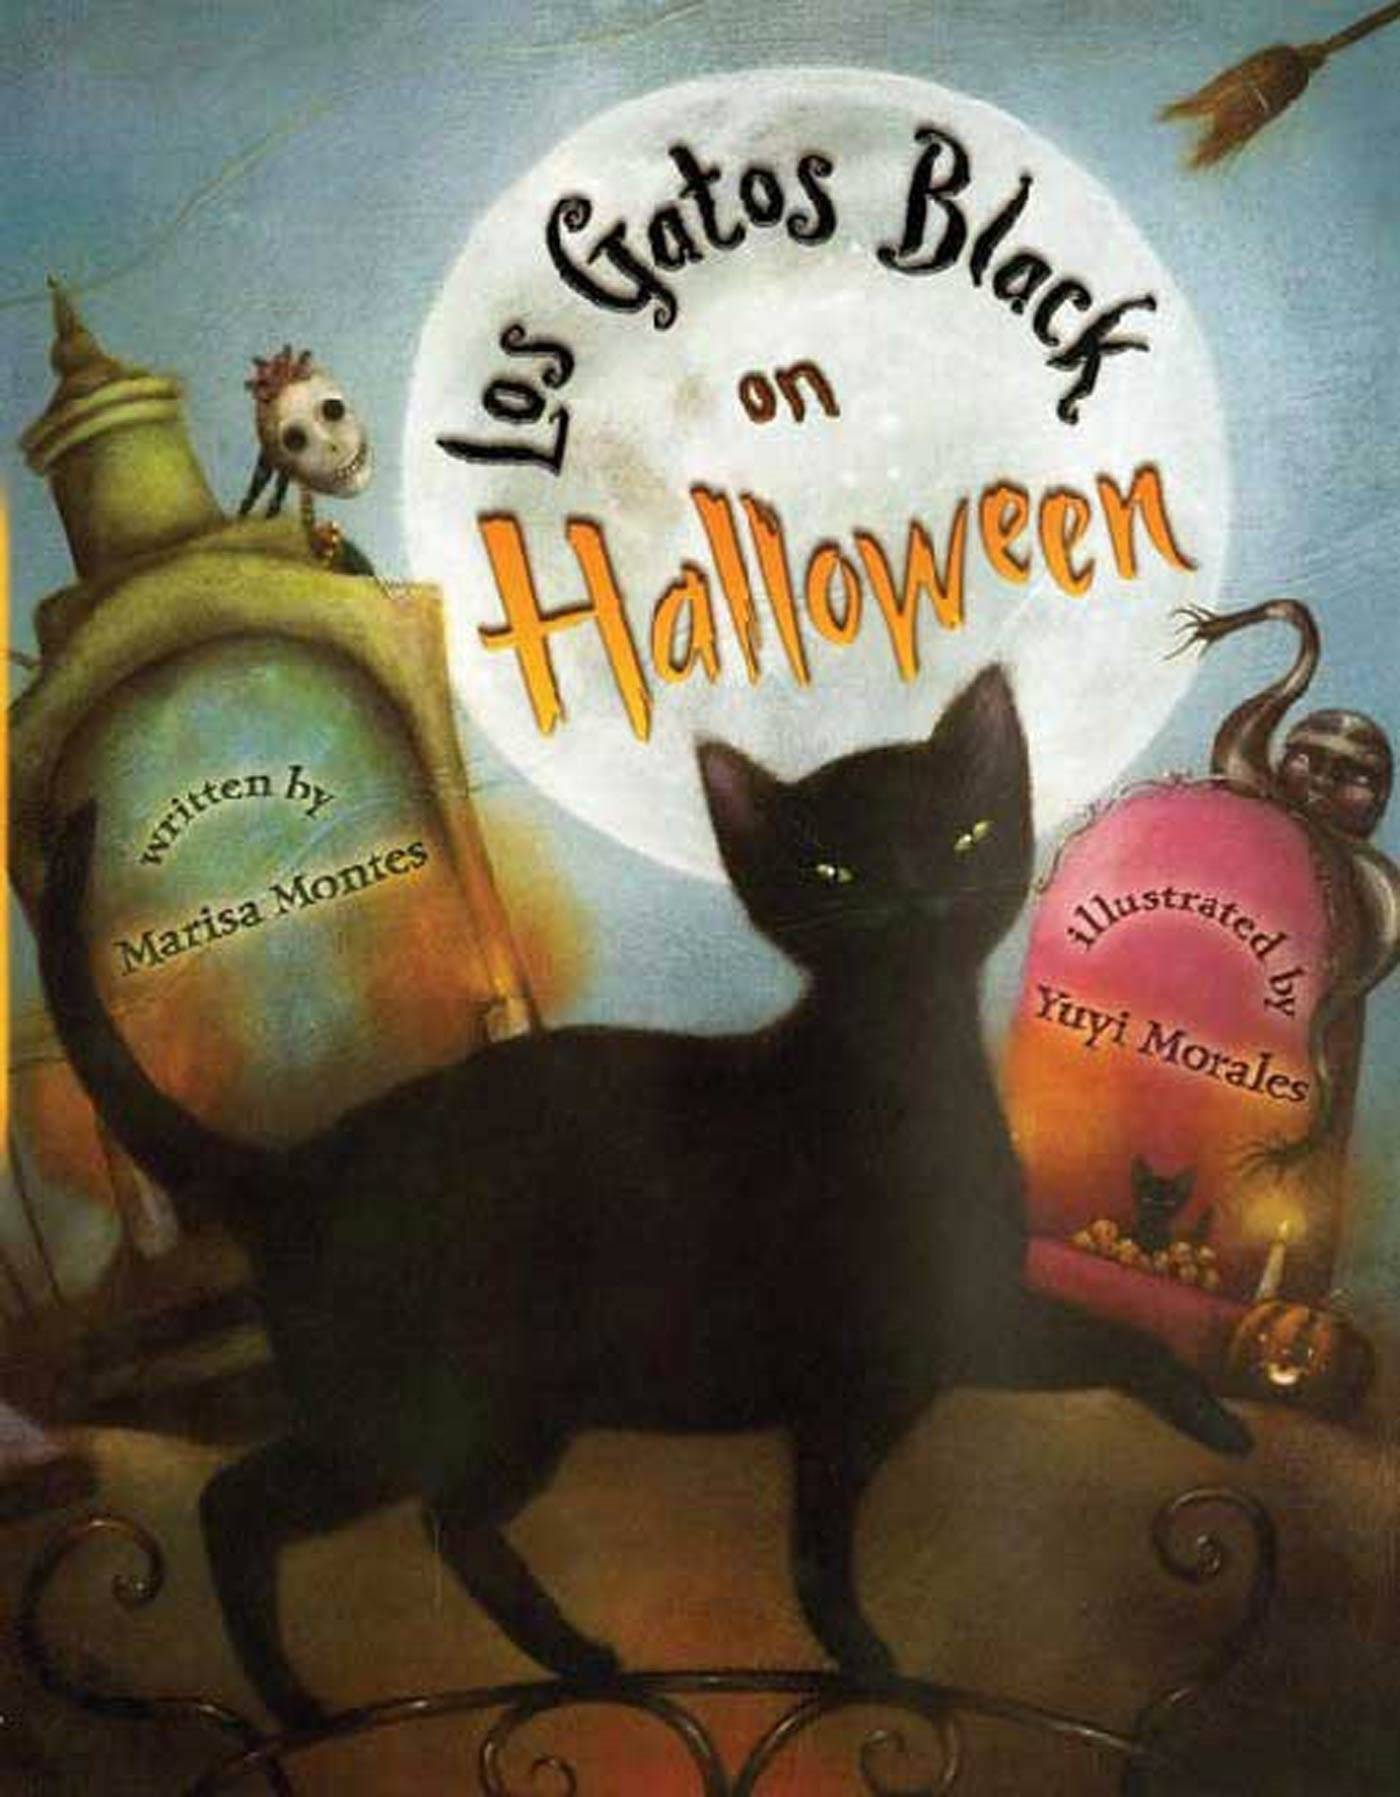 Los Gato Black on Halloween Cover